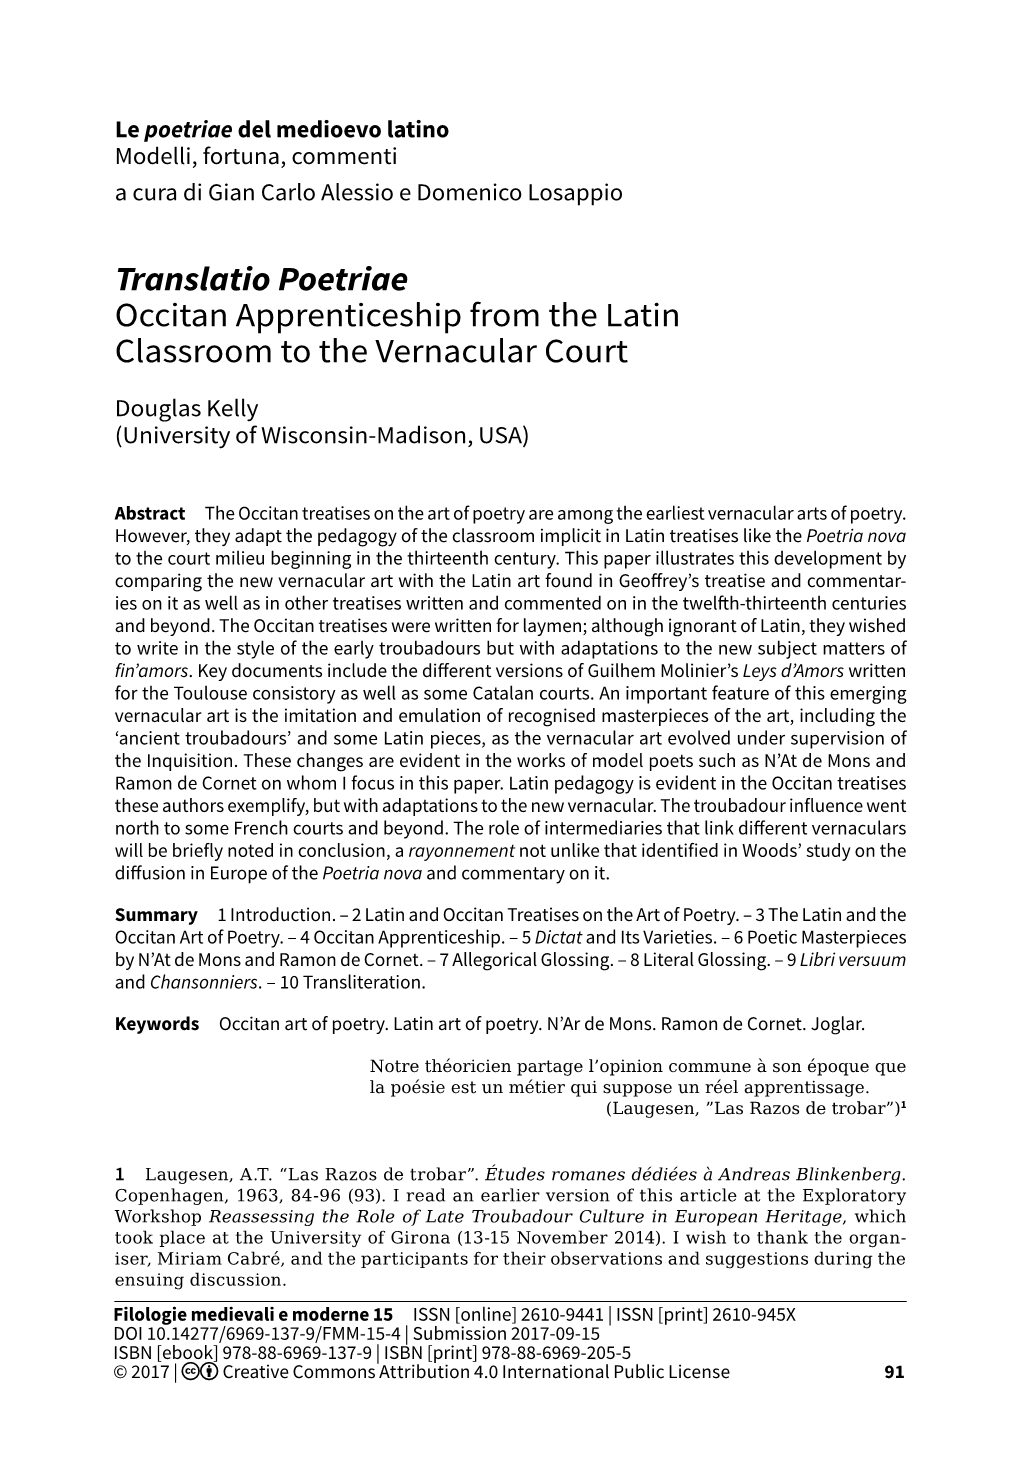 Translatio Poetriae Occitan Apprenticeship from the Latin Classroom to the Vernacular Court